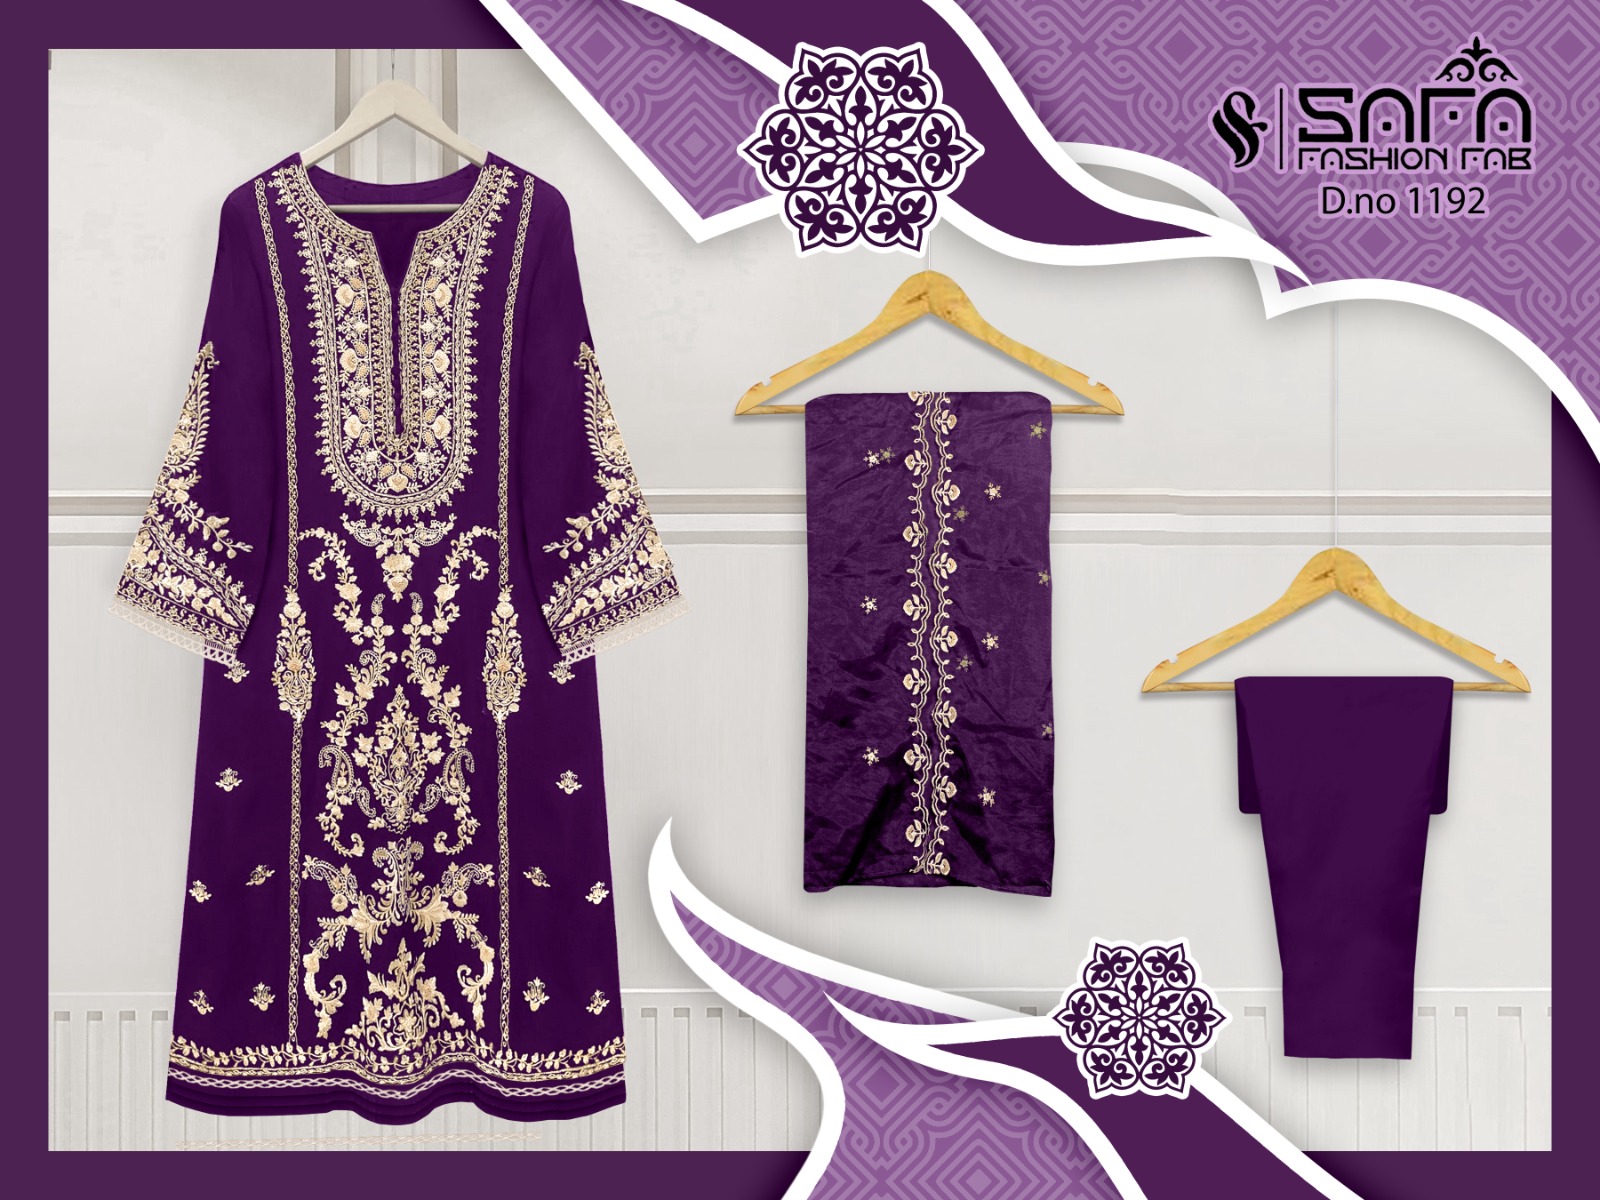 Safa Fashion Fab 1192 collection 1